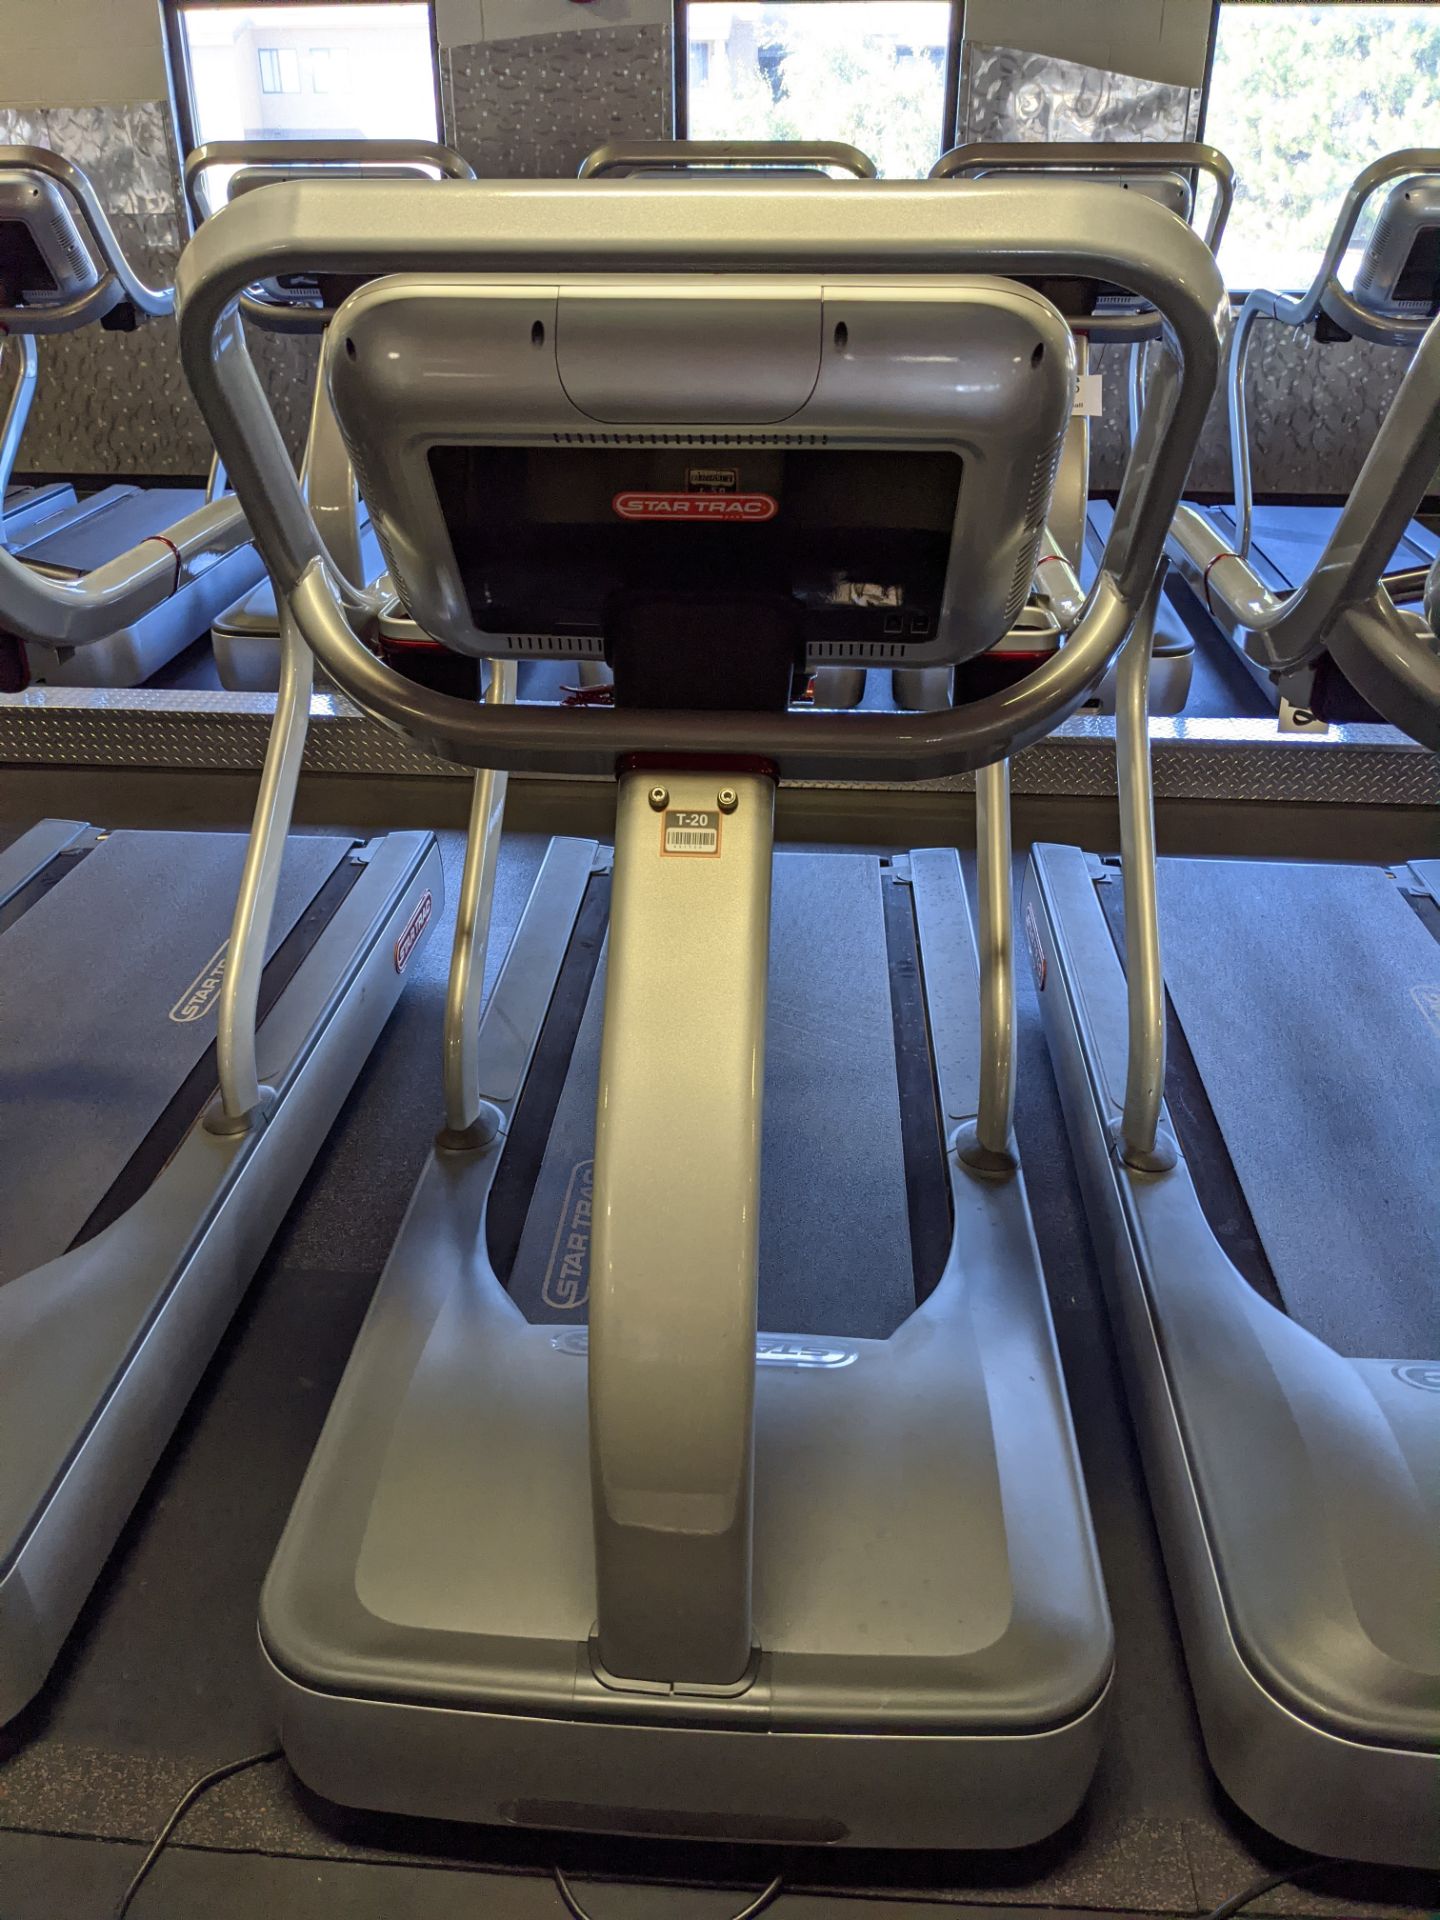 Star Trac Treadmill - Image 4 of 4